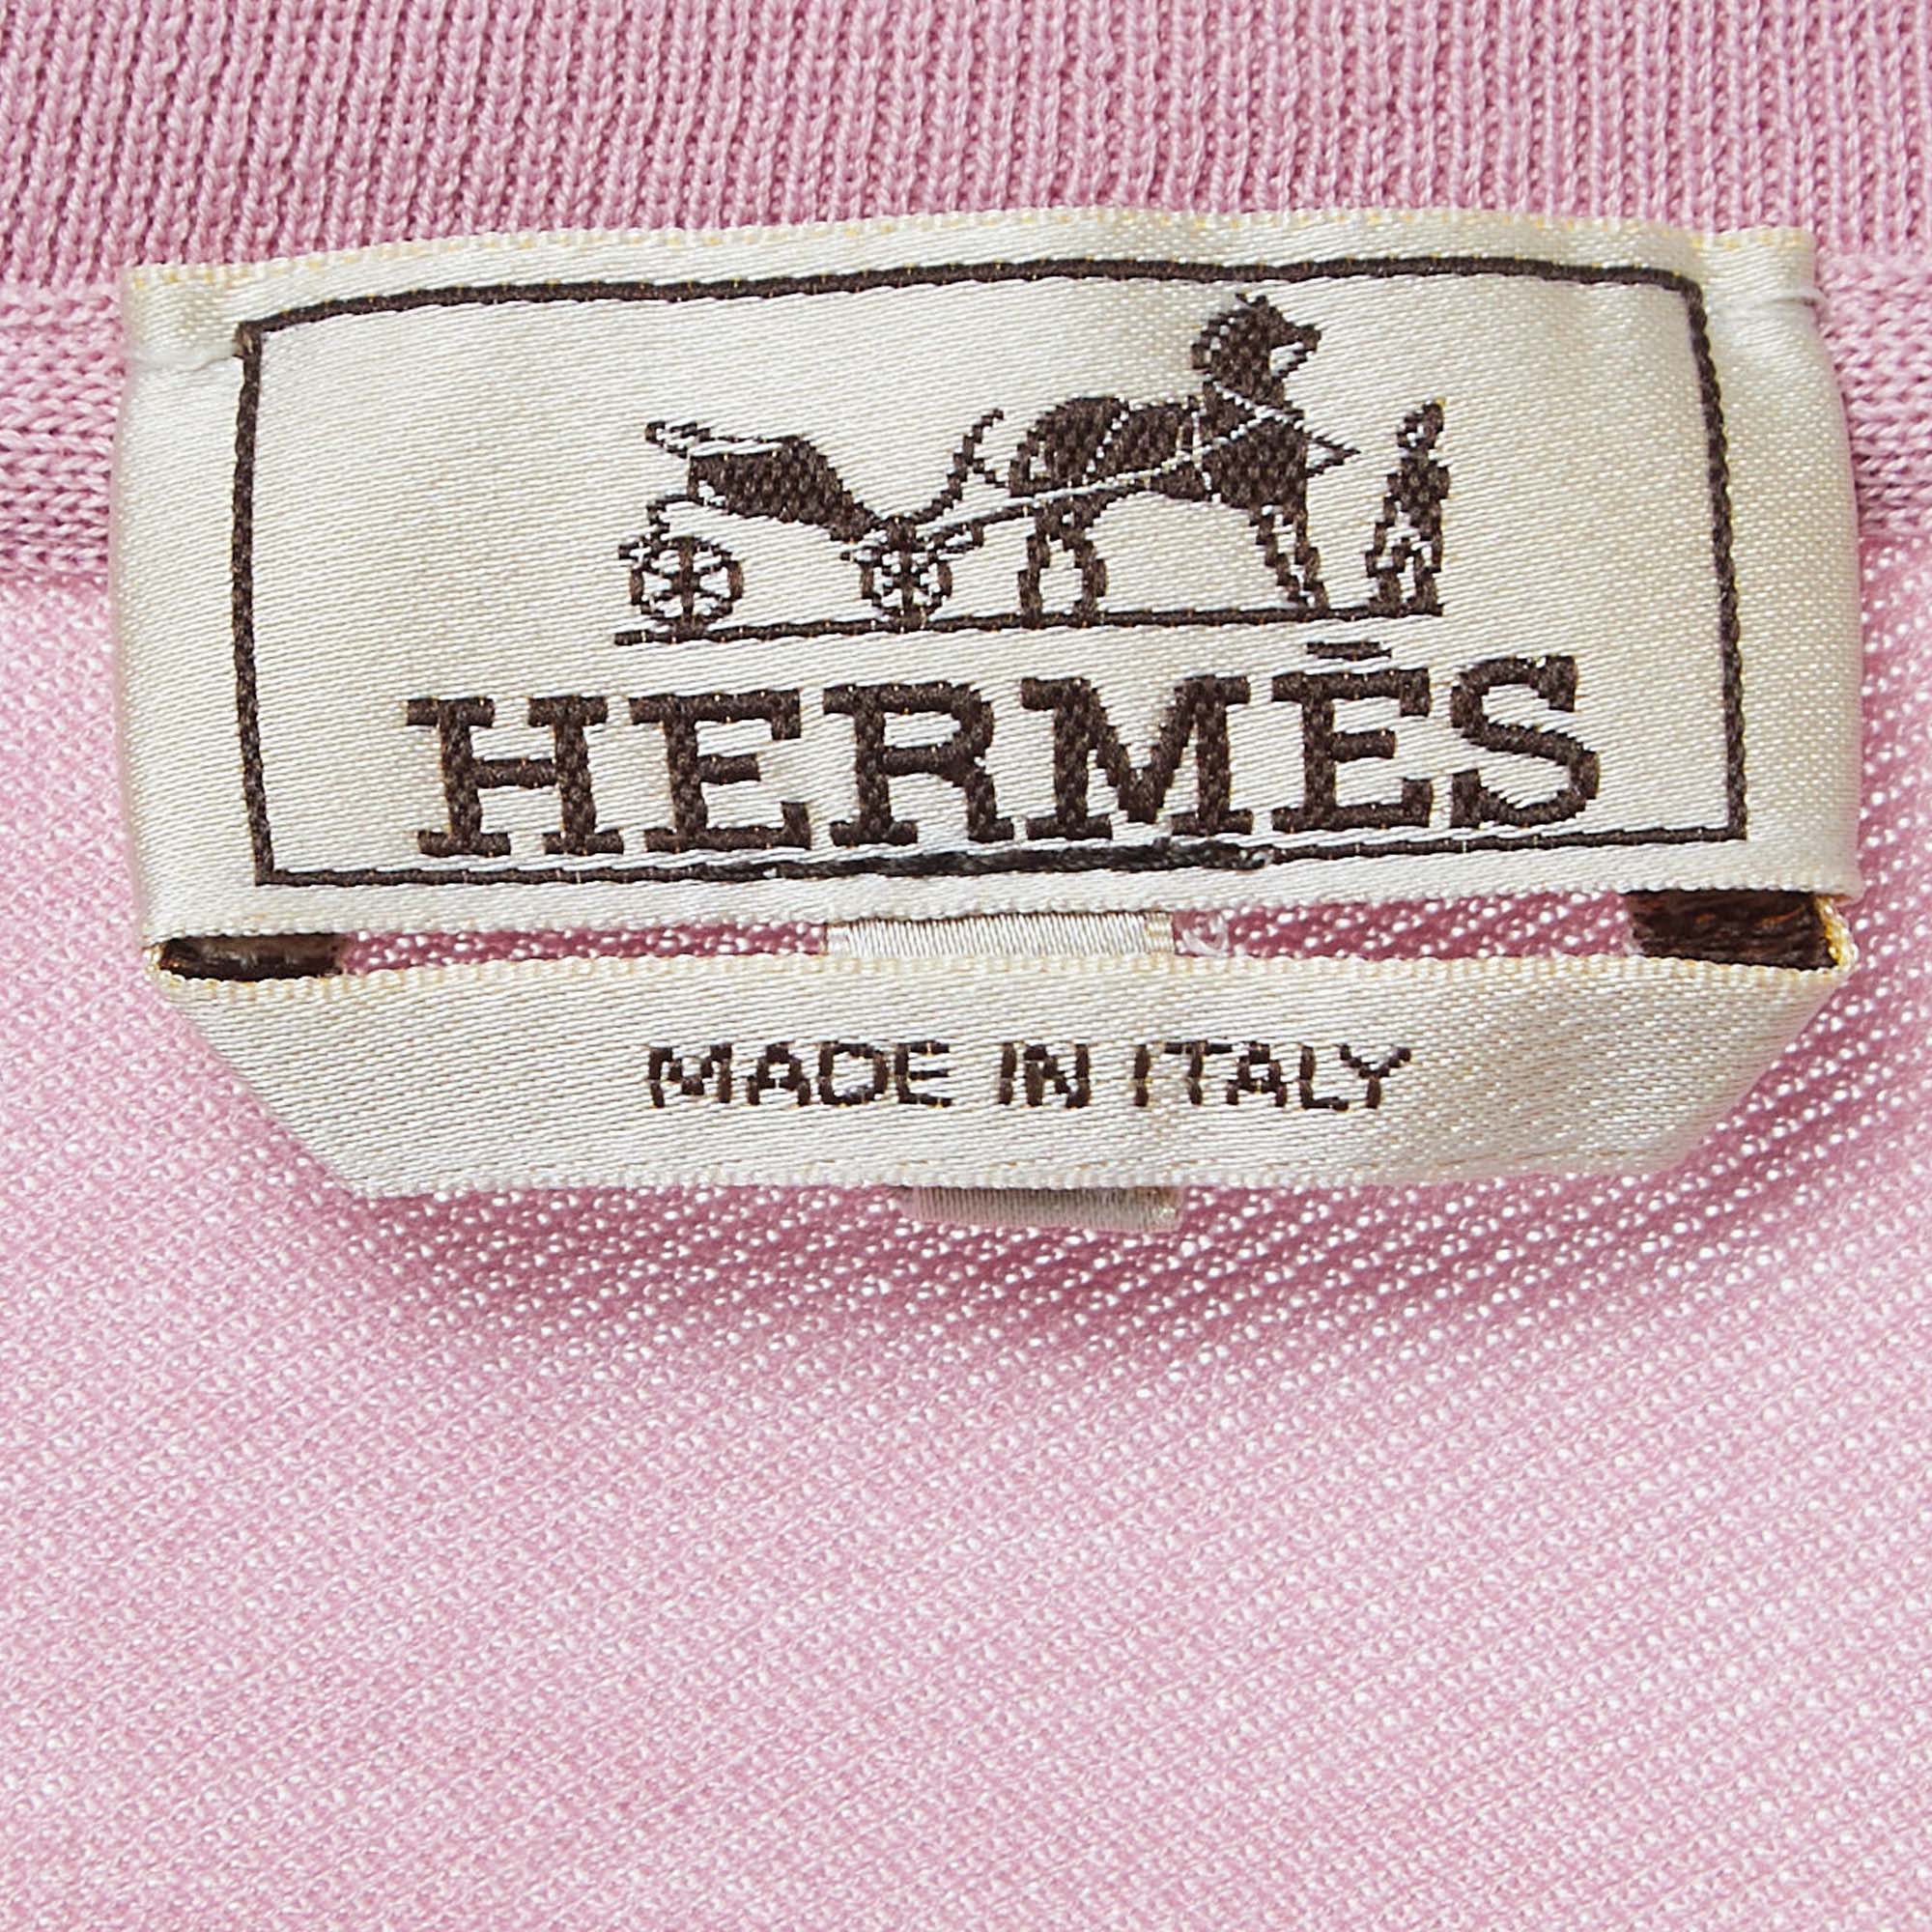 Hermes Pink Cotton Pique Round Neck T-Shirt M